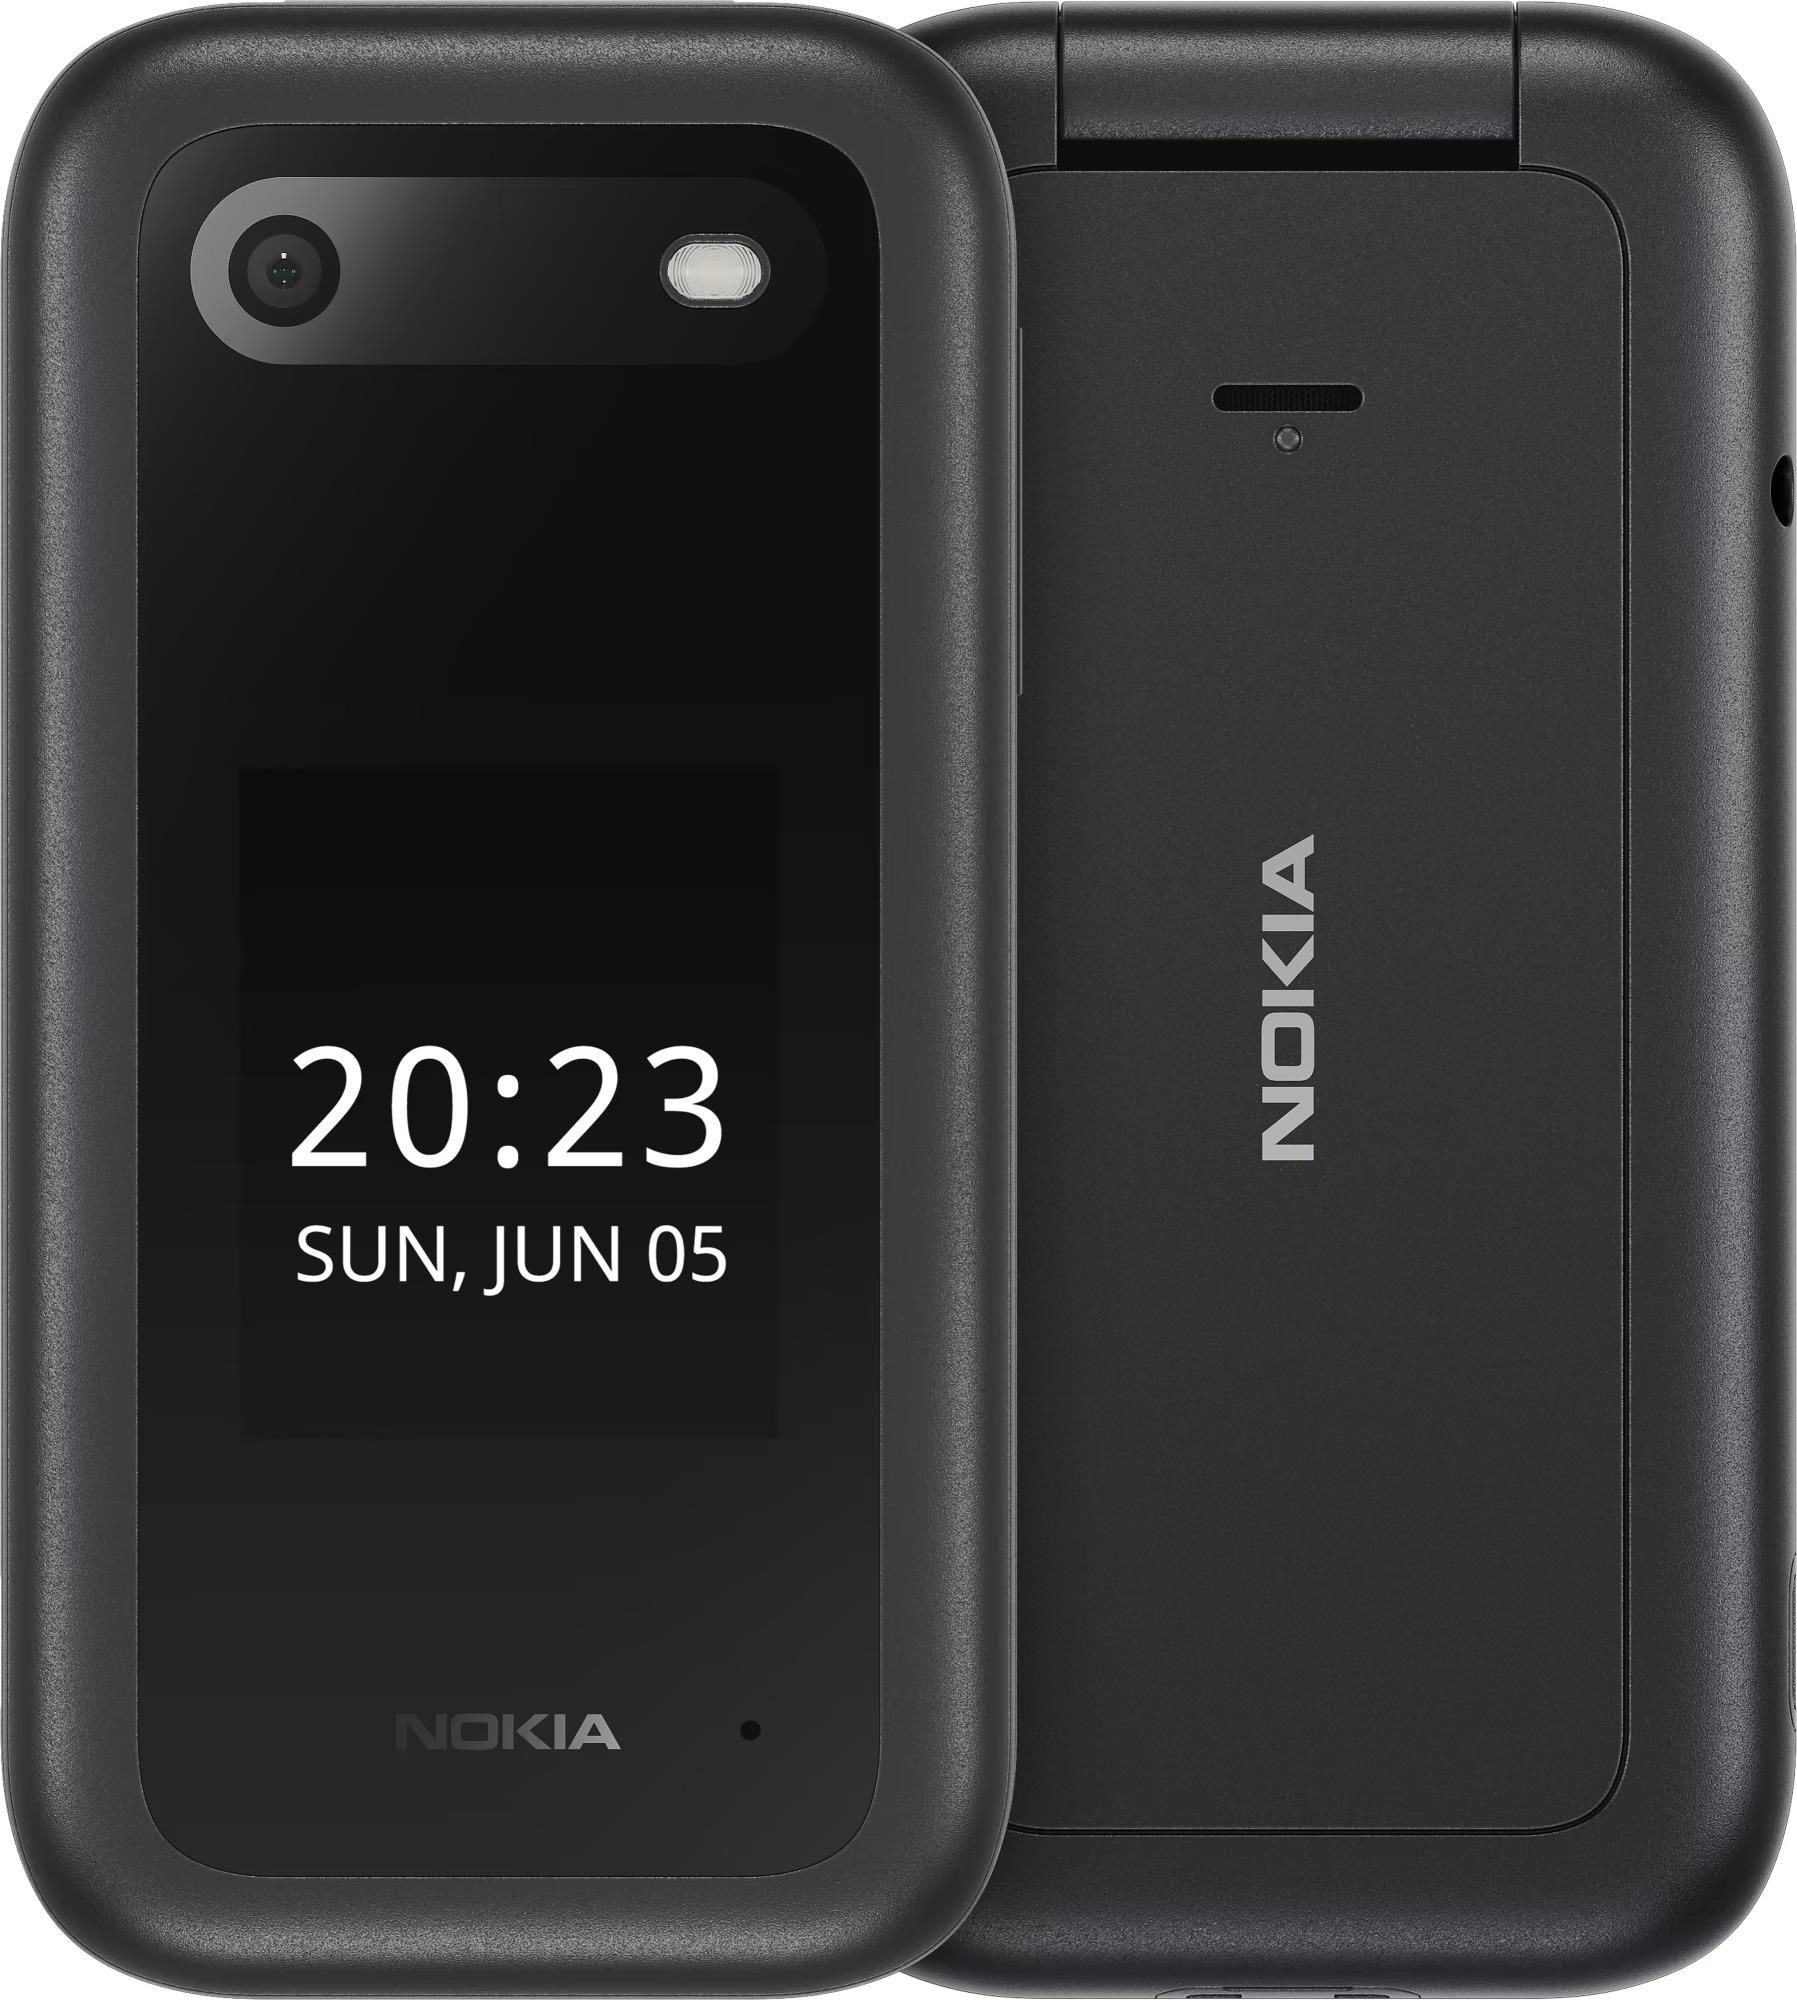 Nokia 2660 Flip 2.8